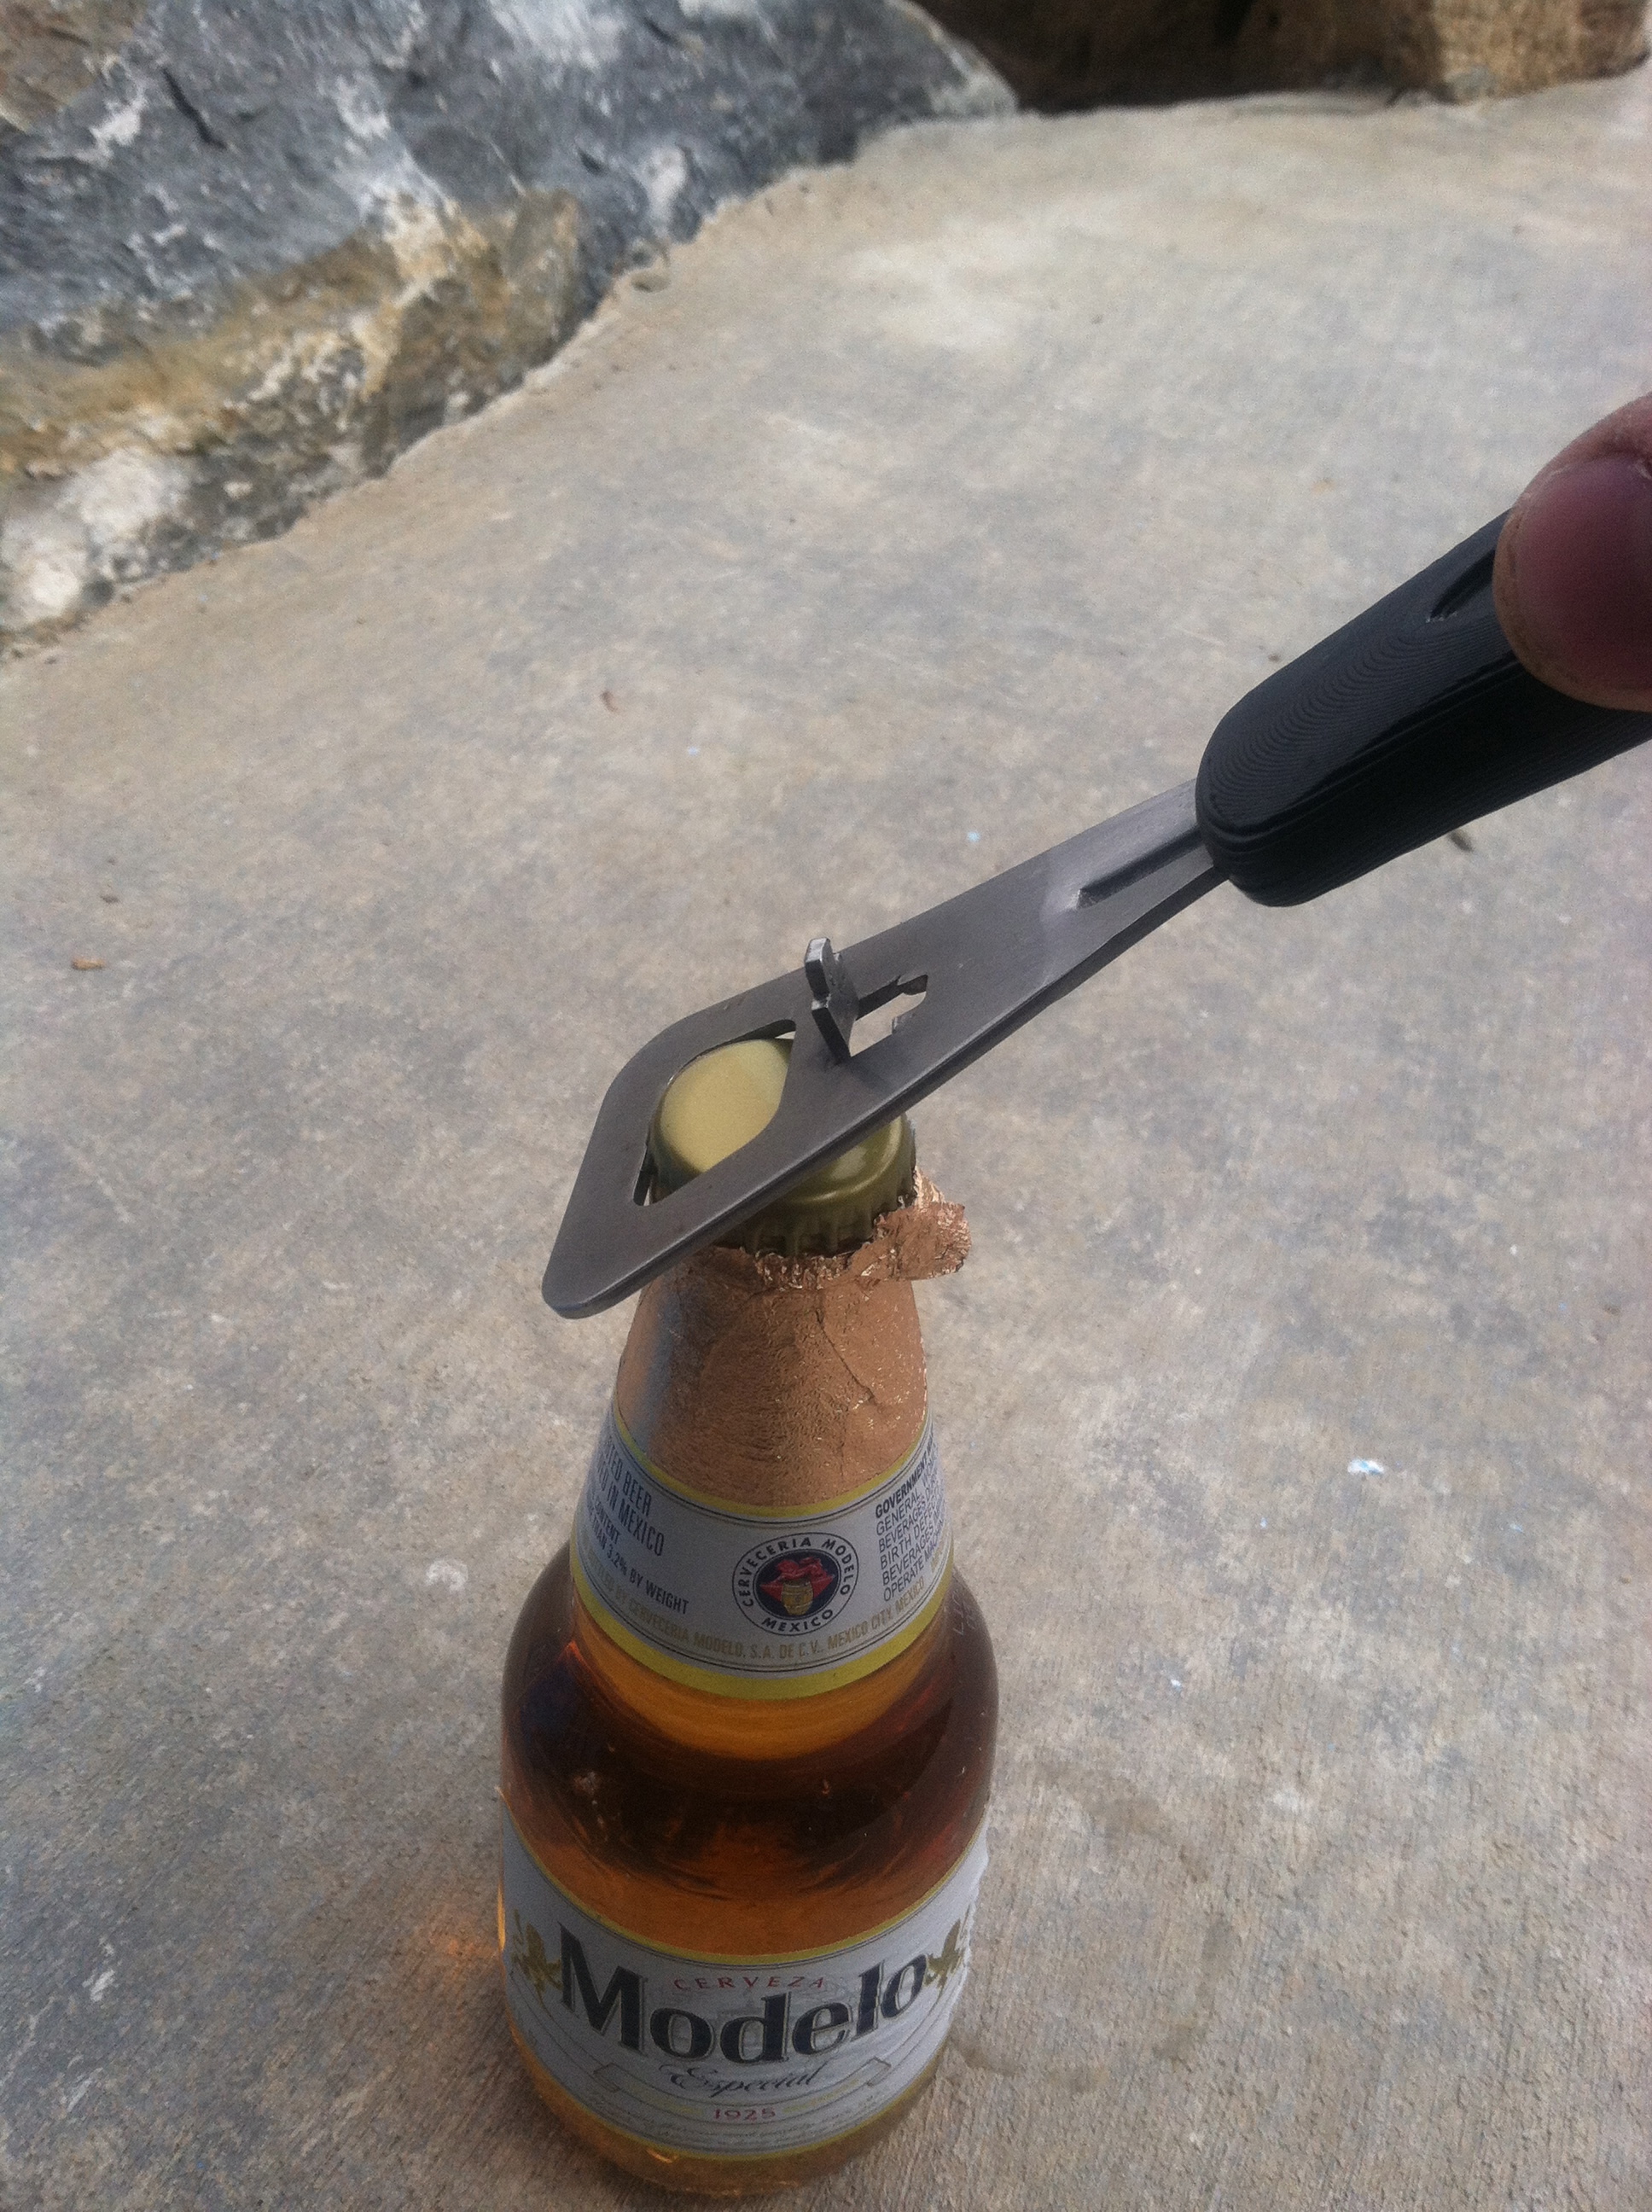 Built in bottle opener.